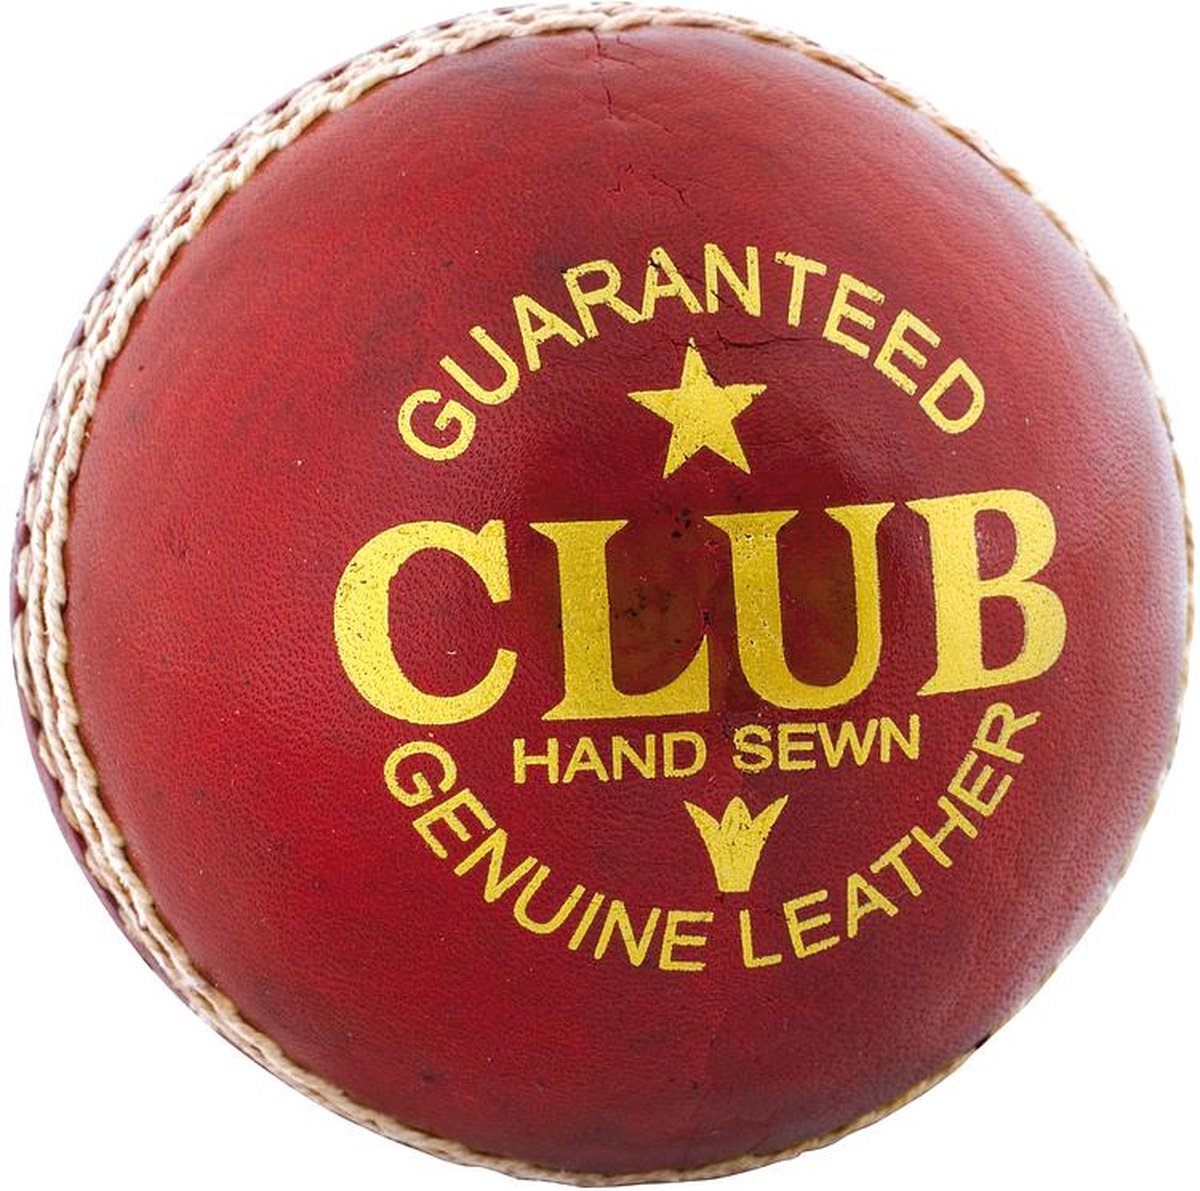 Readers Club Cricket Ball